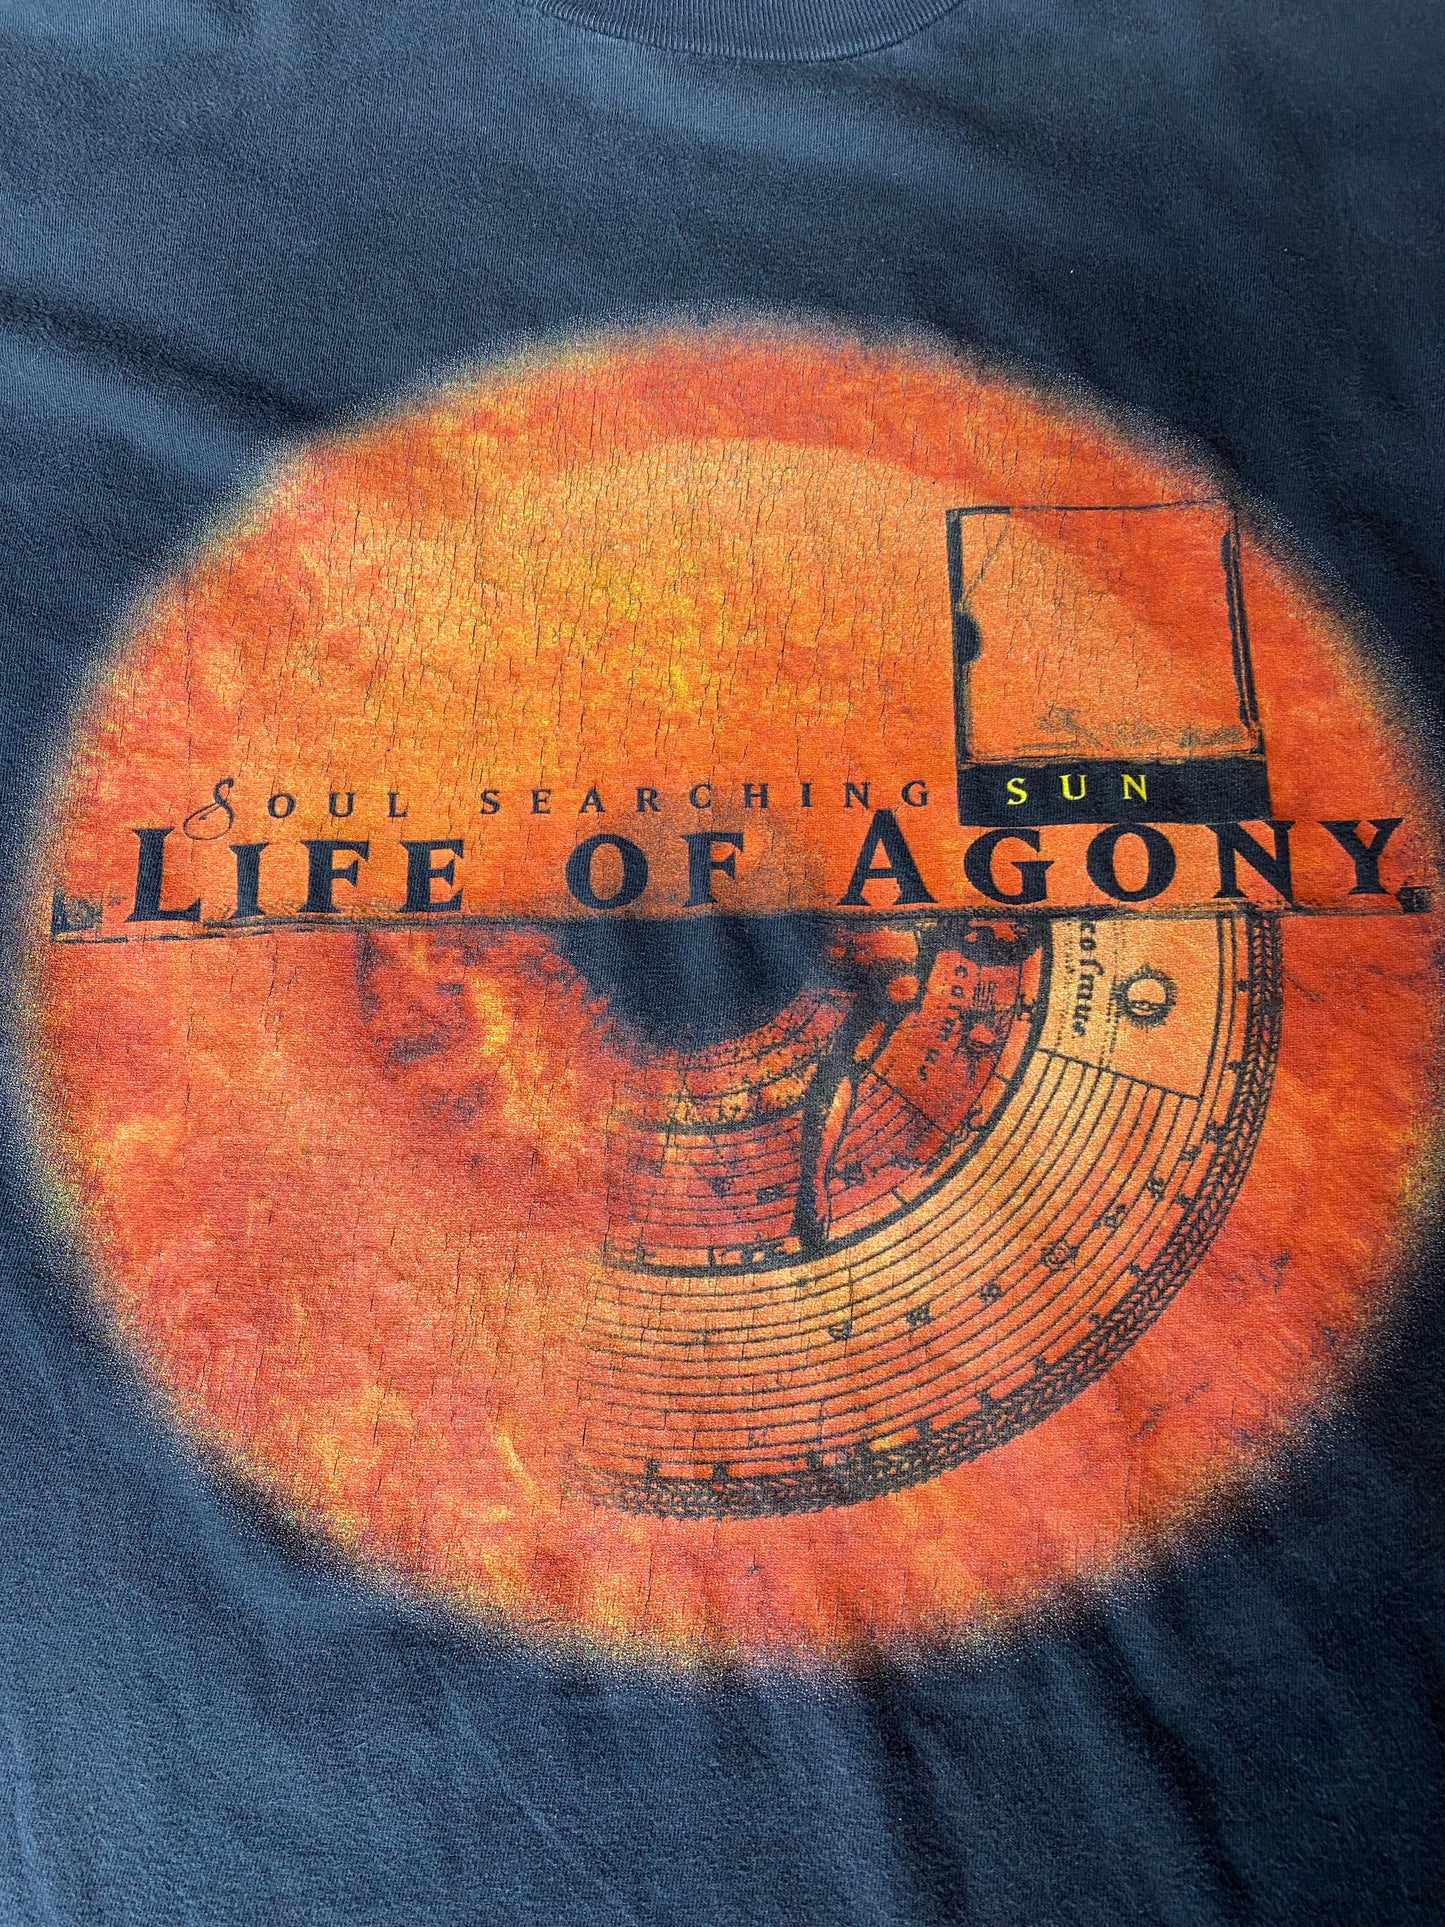 Vintage 1997 Life of Agony “Soul Searching Sun” Album Merch T-Shirt